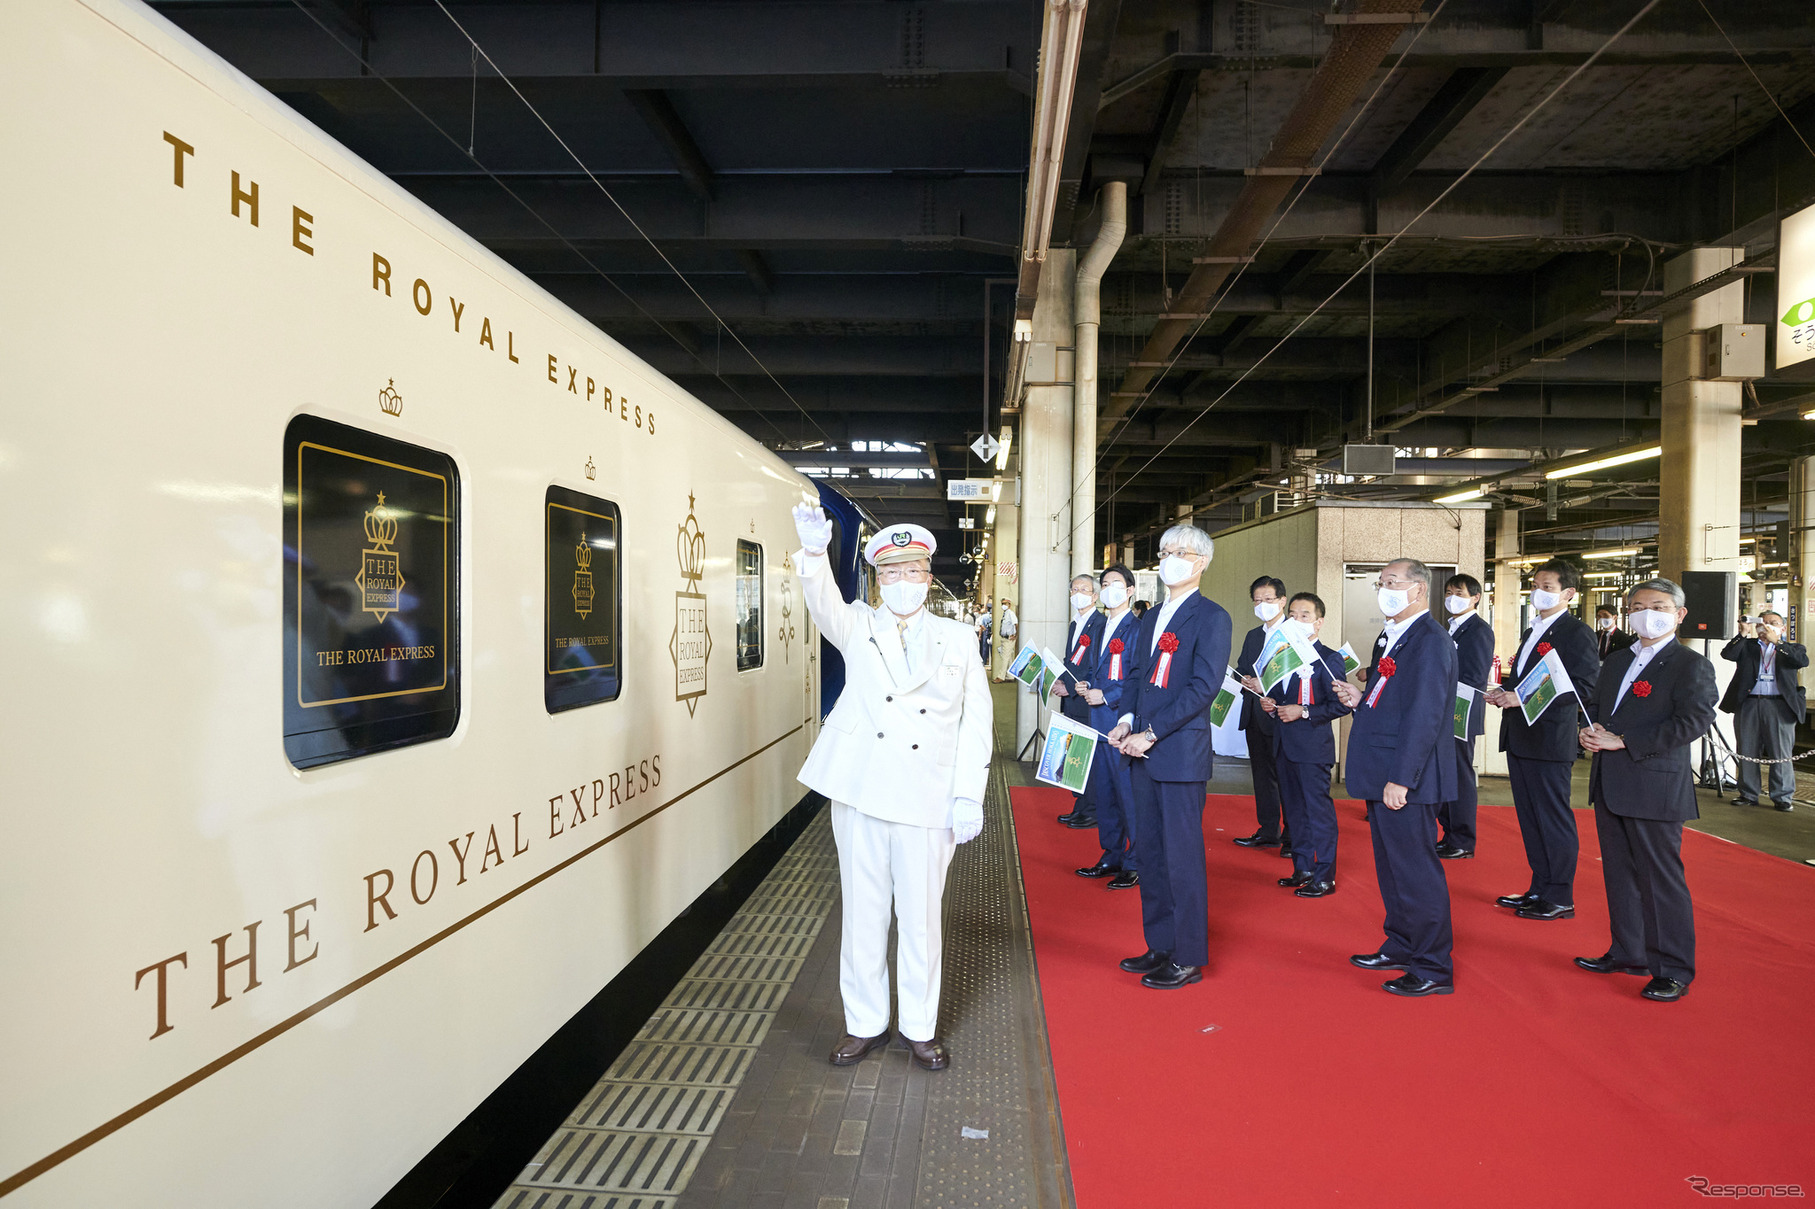 『THE ROYAL EXPRESS』初運行時の札幌出発シーン。